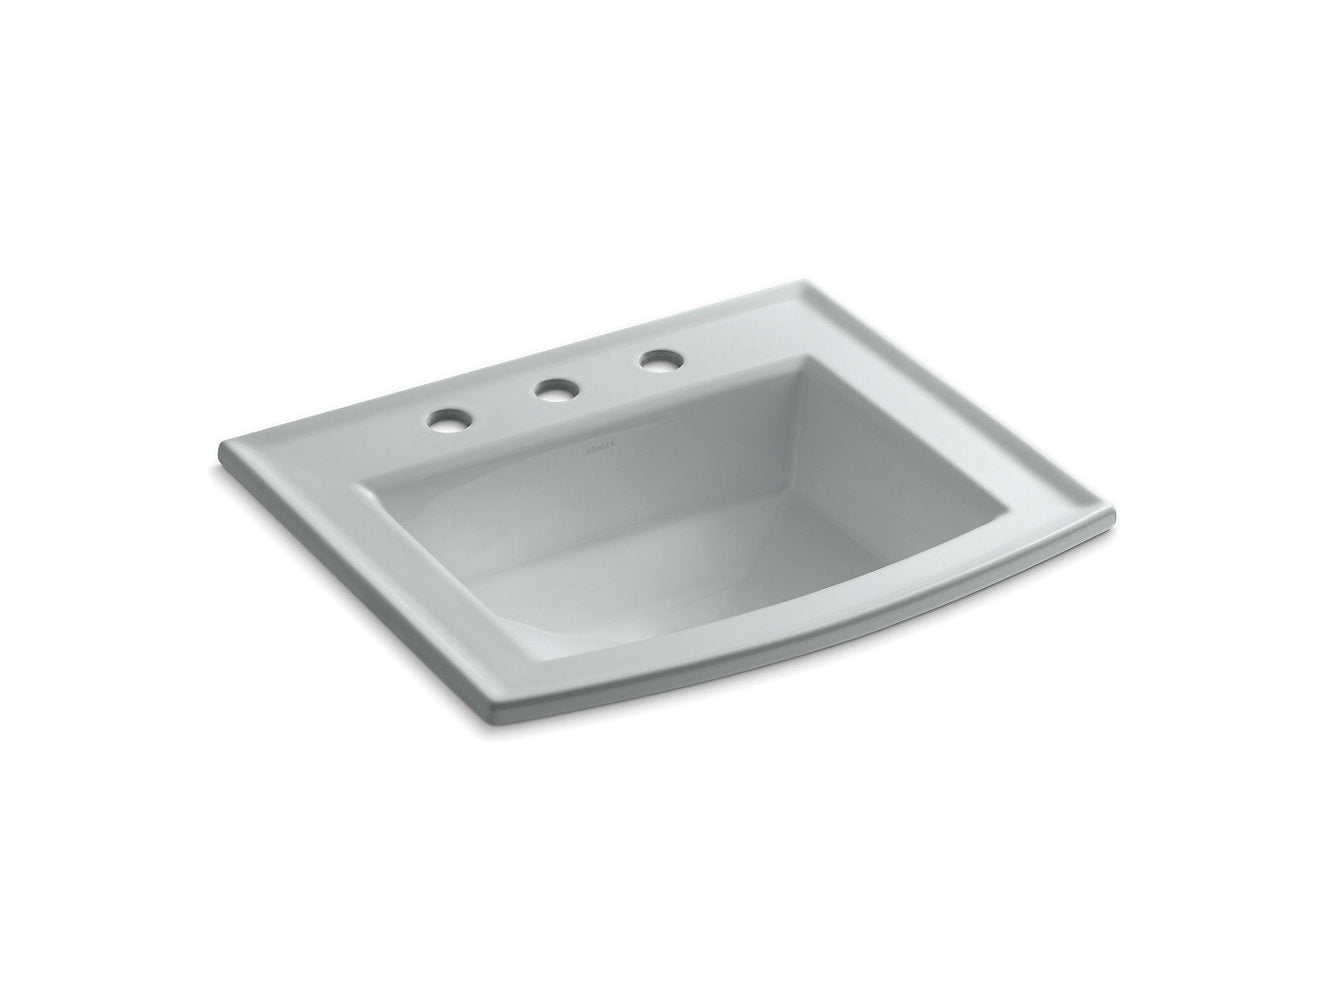 Kohler Archer 22 ⅝" x 19 ⁷⁄₁₆" Drop-in Bathroom Sink With 8" Widespread Faucet Holes - Ice Grey